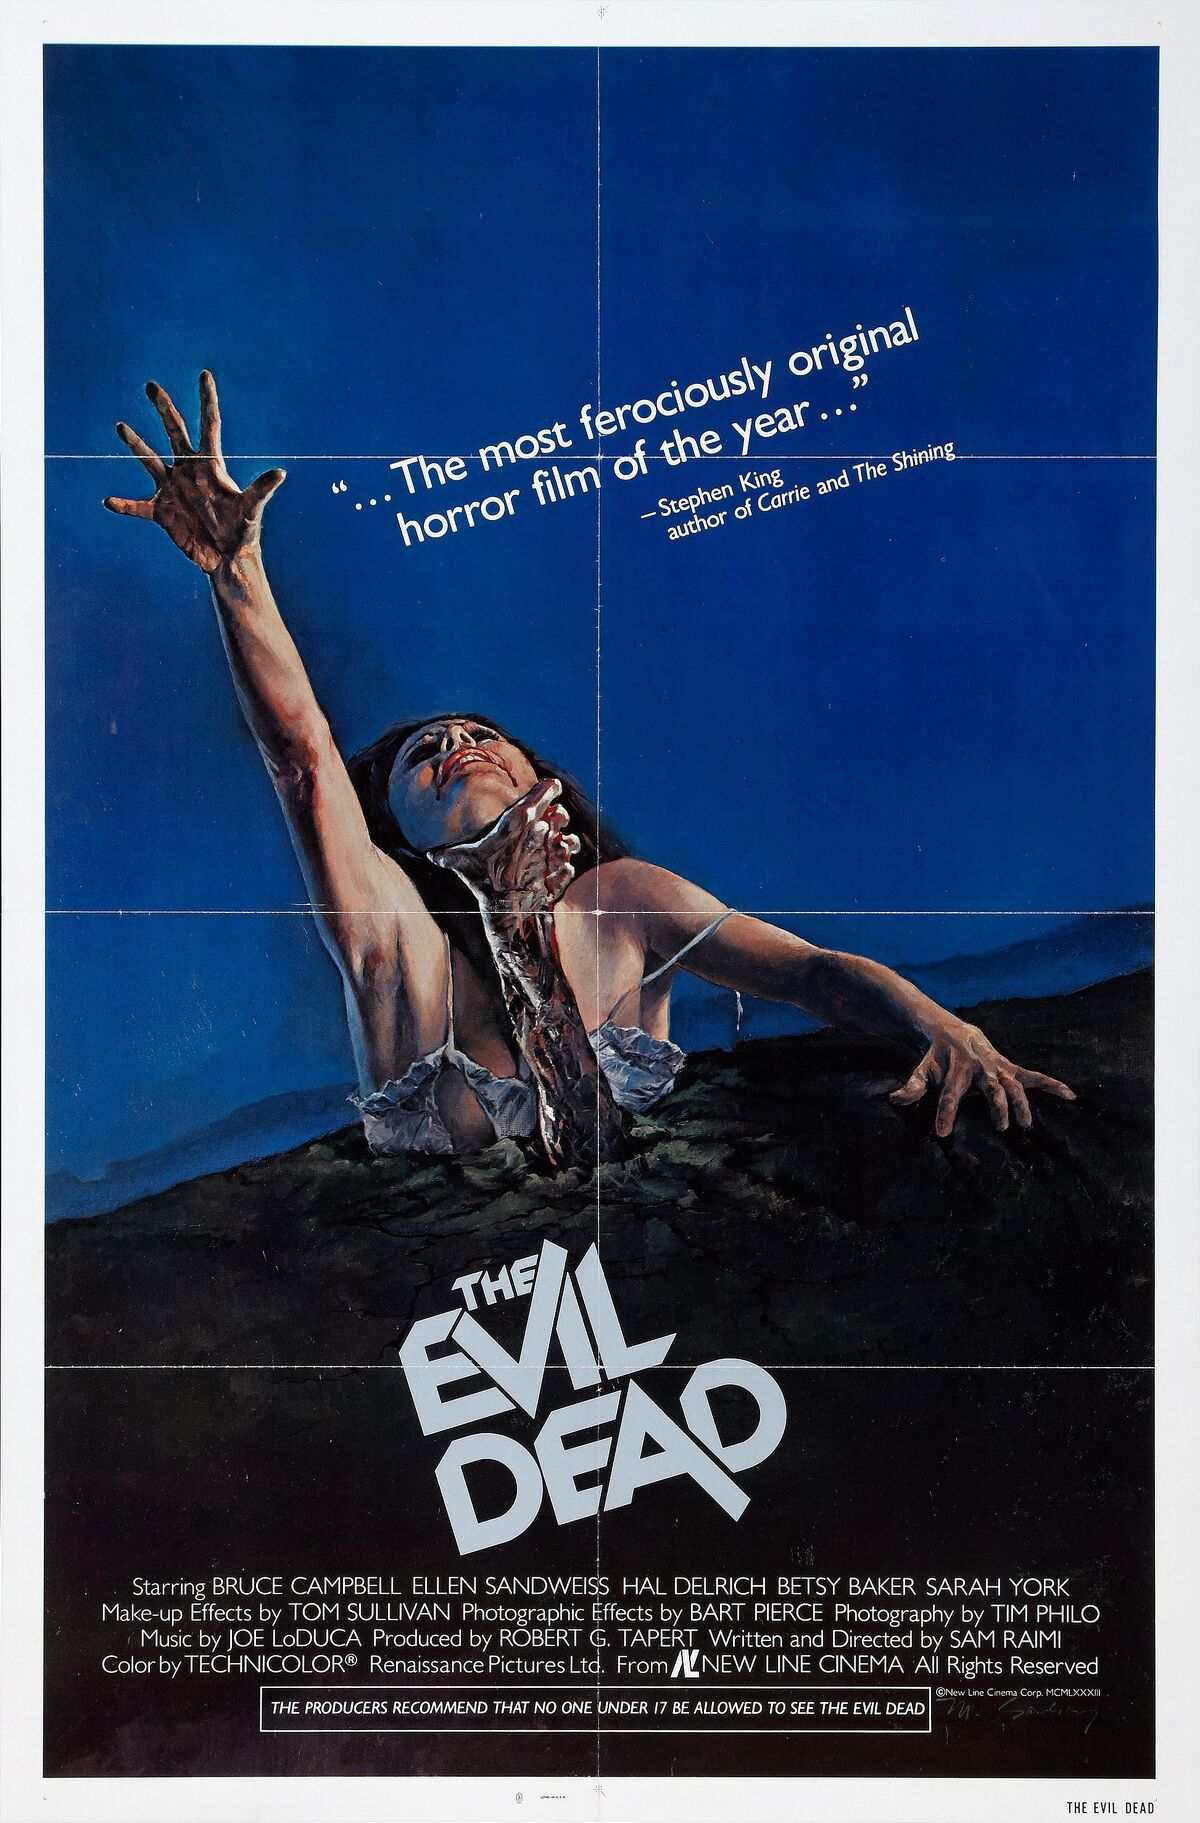 DVD Review: Sam Raimi's The Evil Dead on Anchor Bay Entertainment - Slant  Magazine